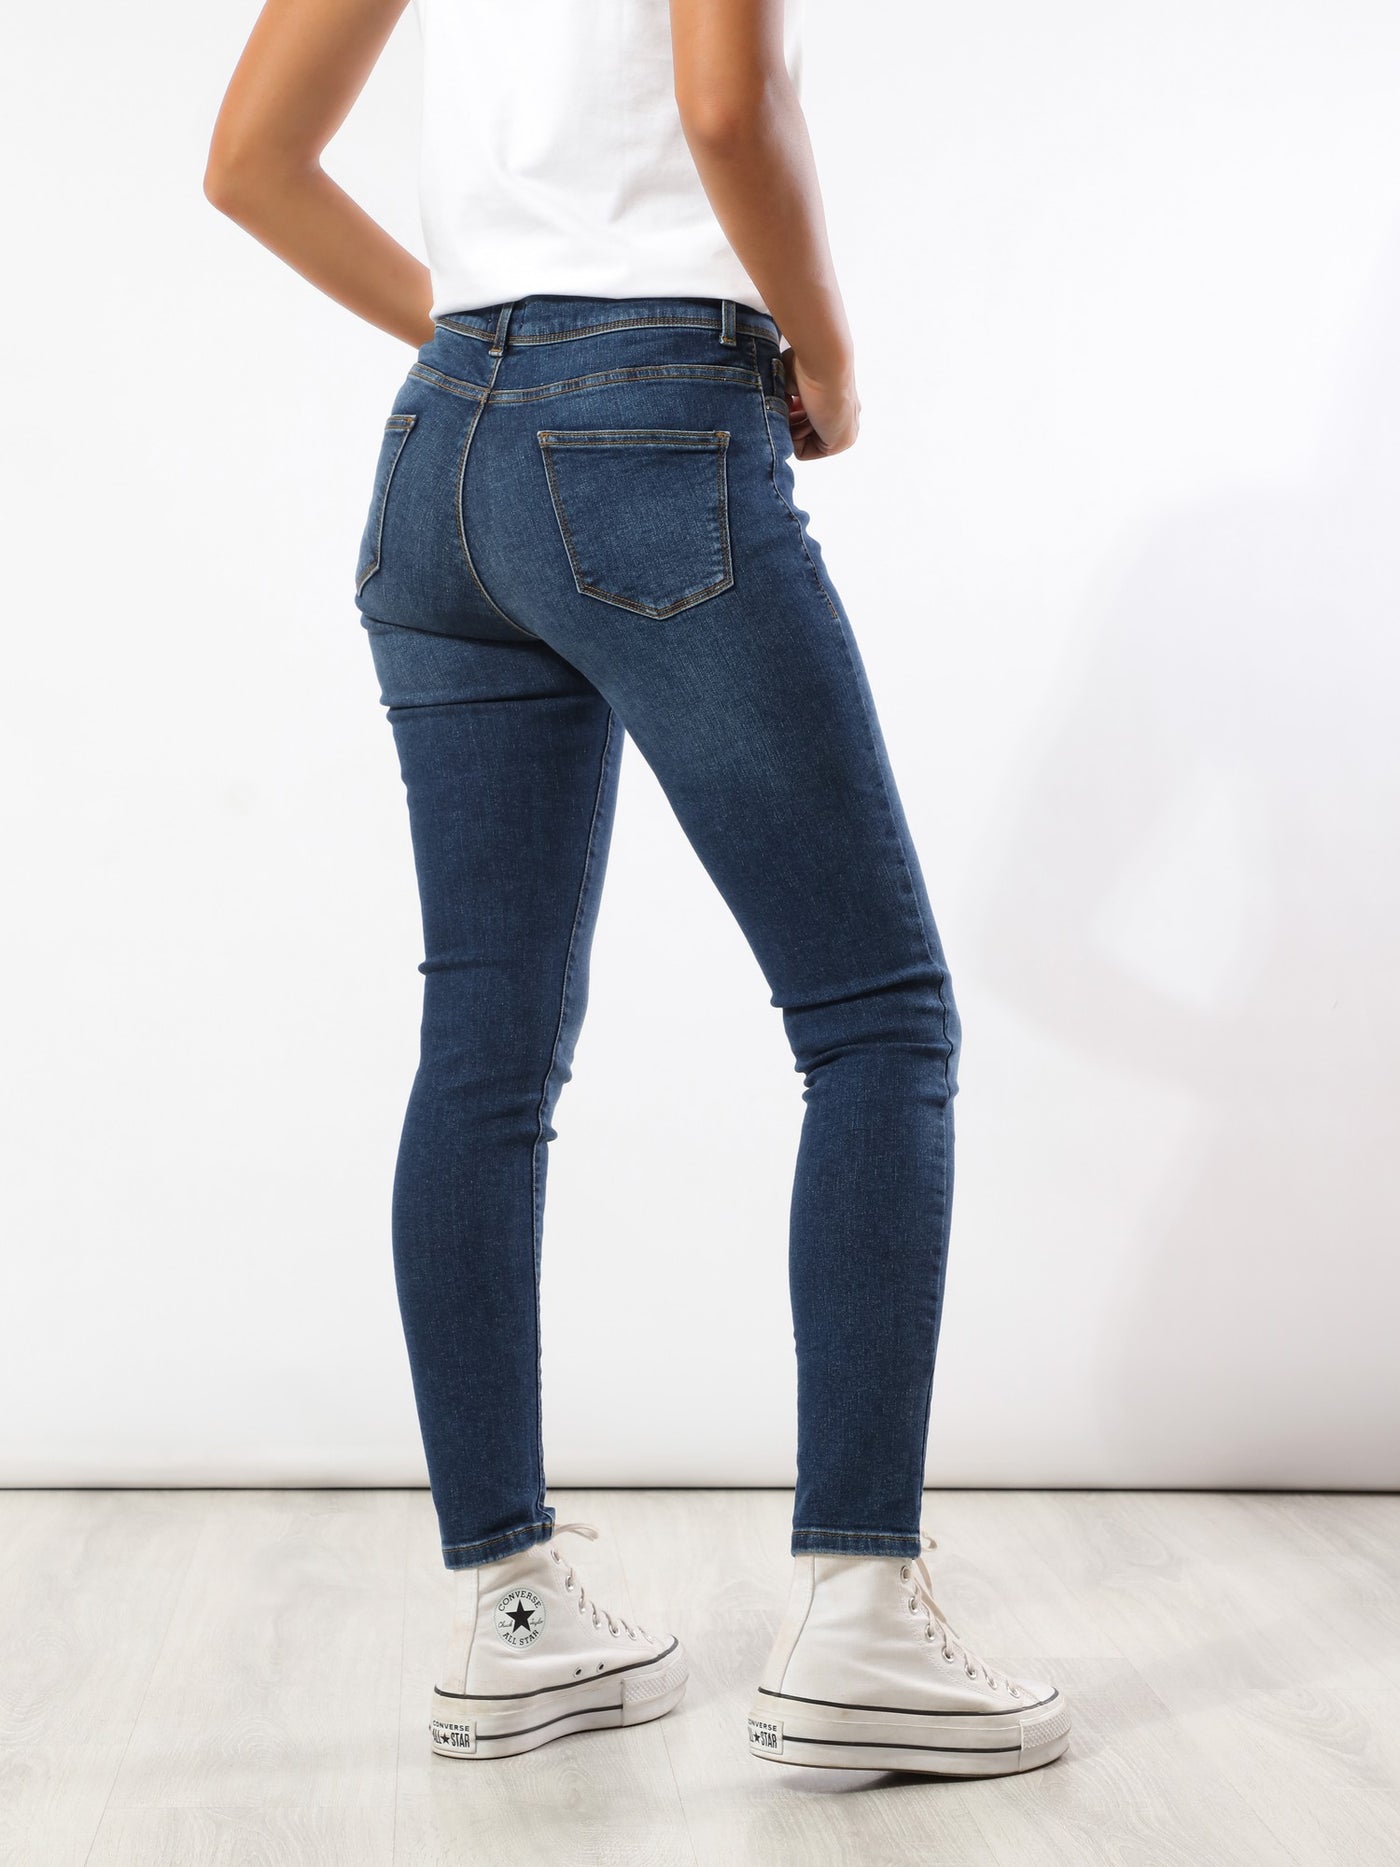 Jeans - Skinny Fit - Plain